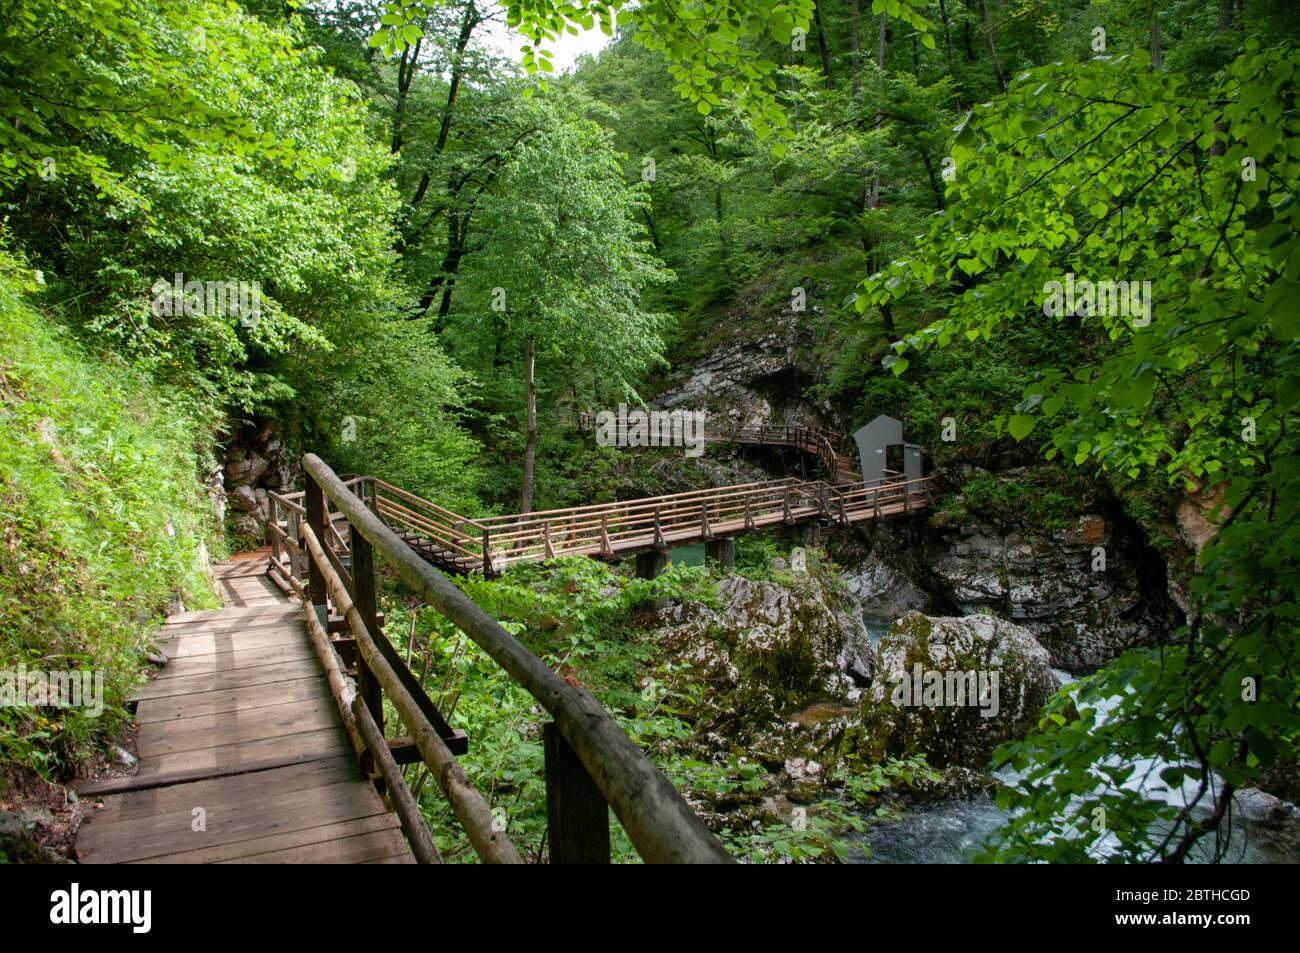 Vintgar gorge, beauty of nature, river Radovna through mountains,Bled, Slovenia. Trees and wooden bridges. Stock Photo